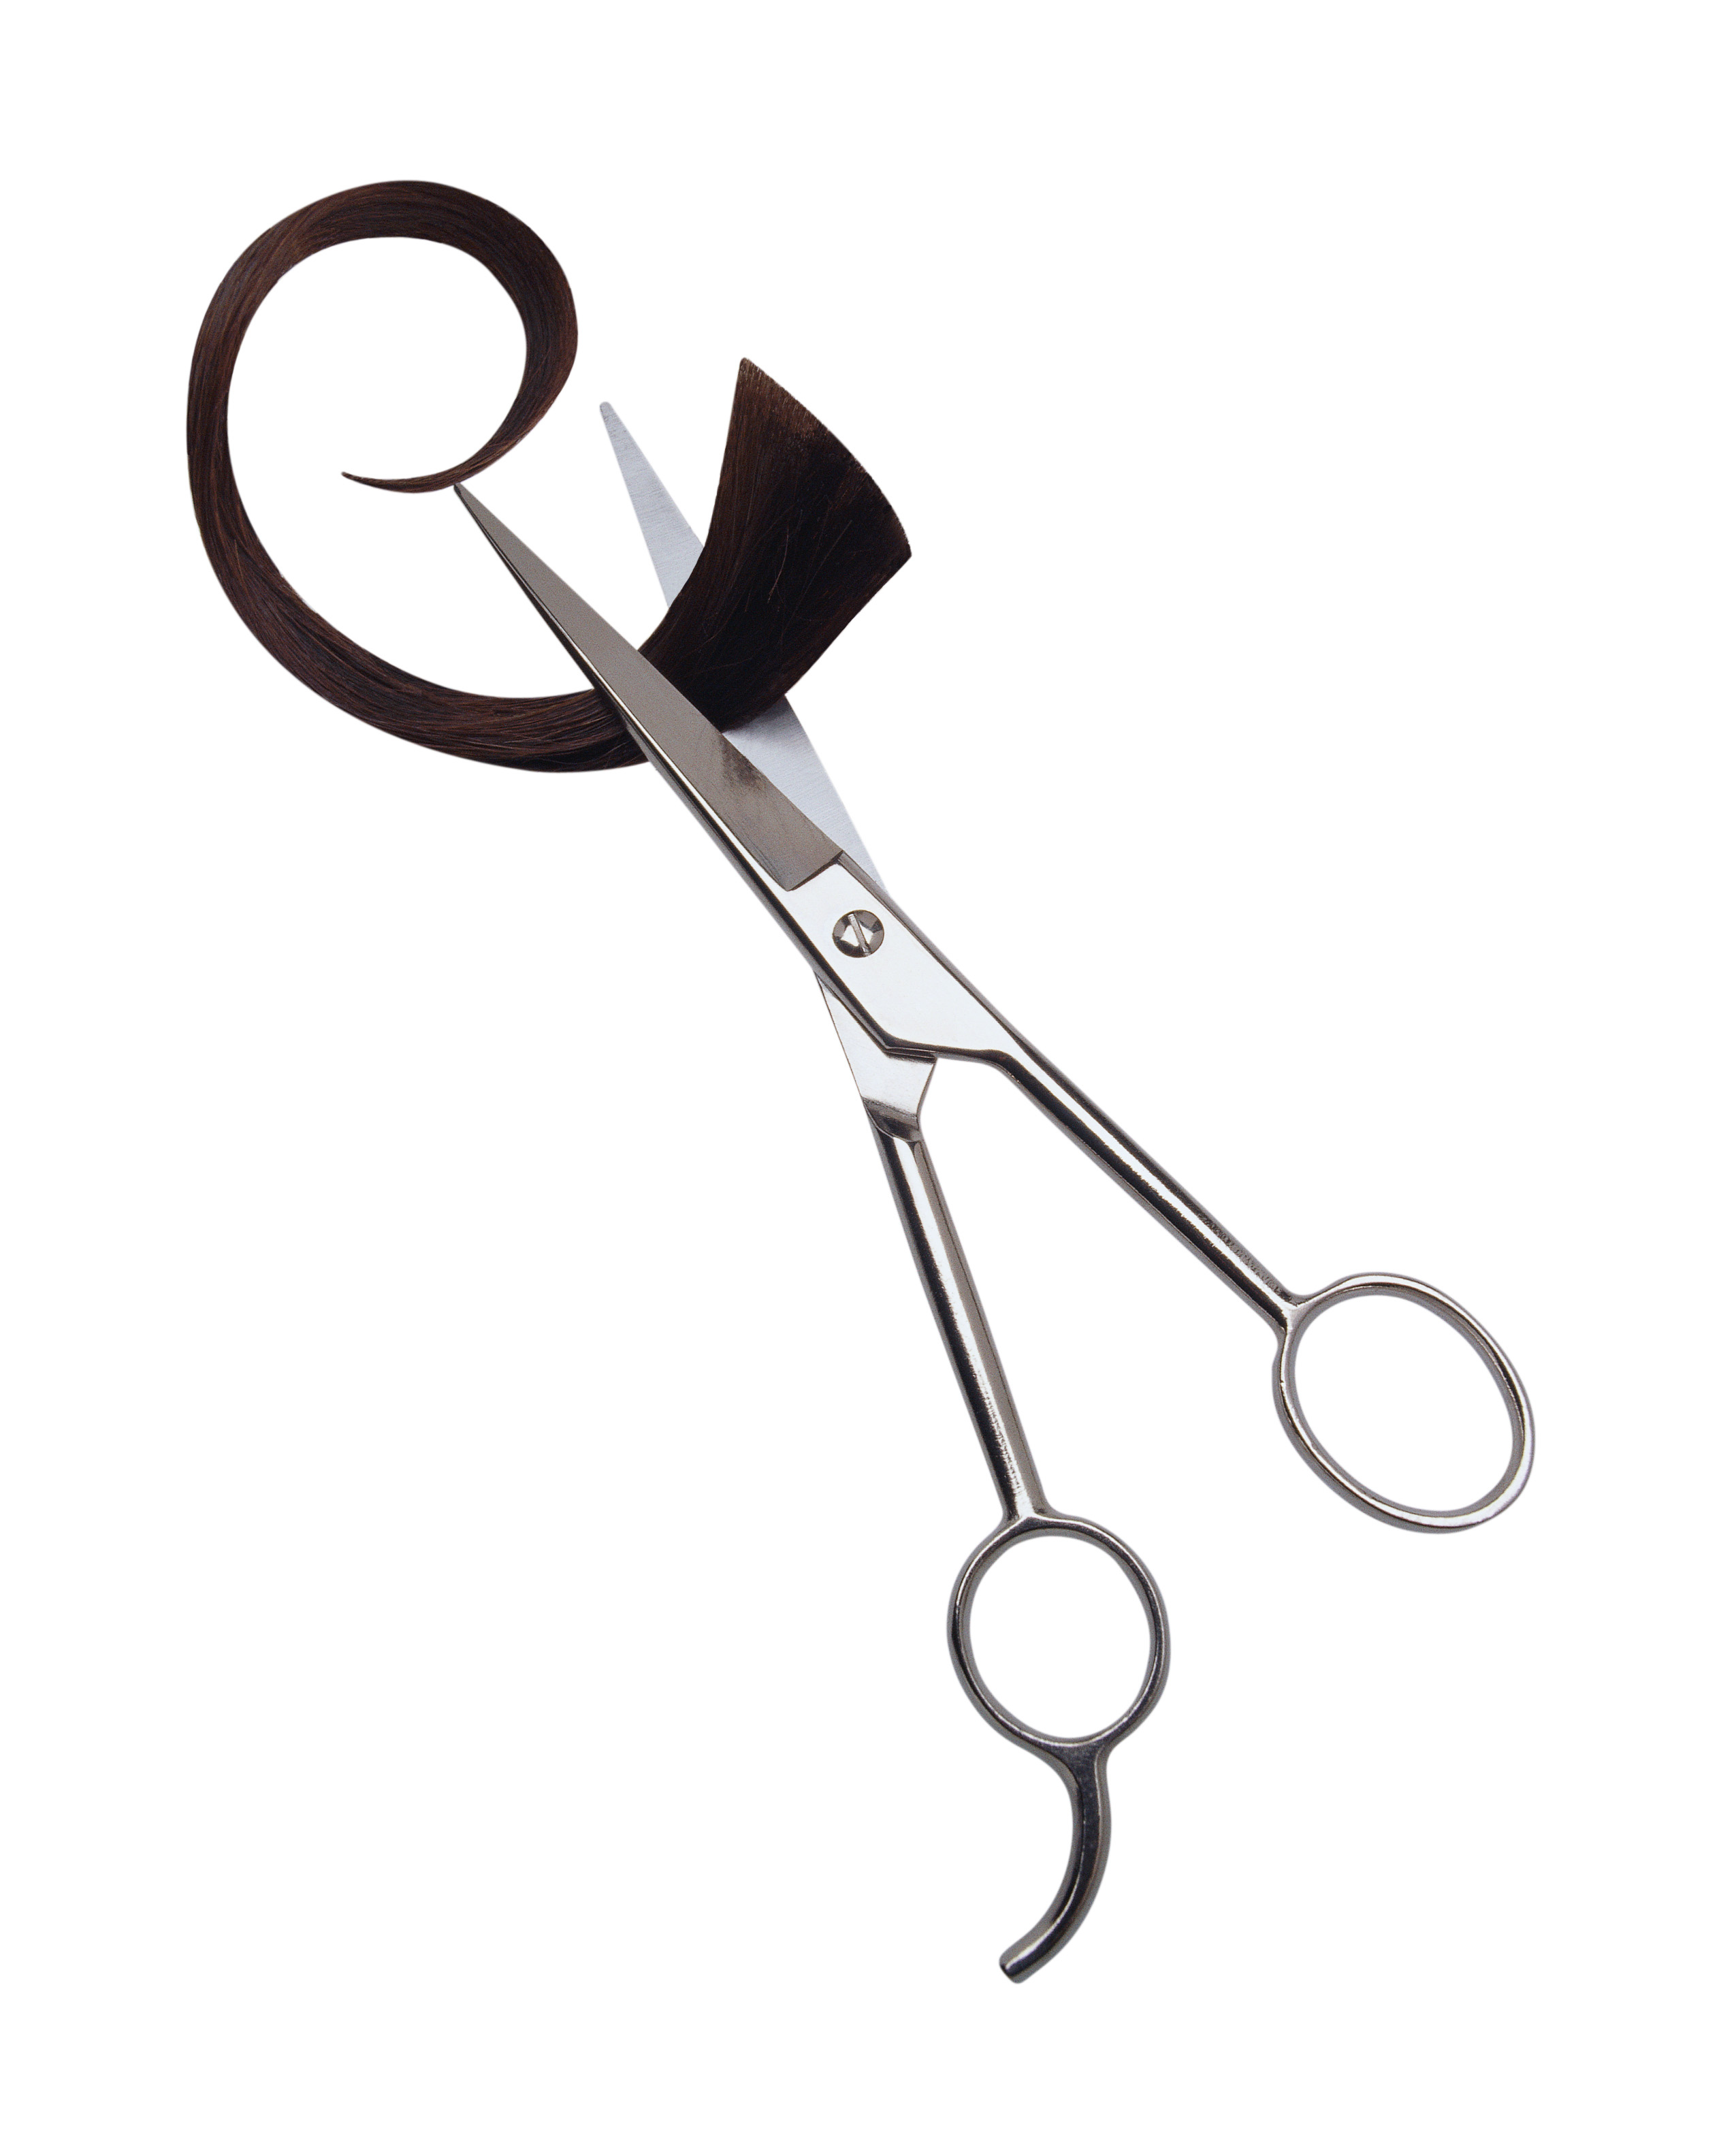 Hair scissors clip art style